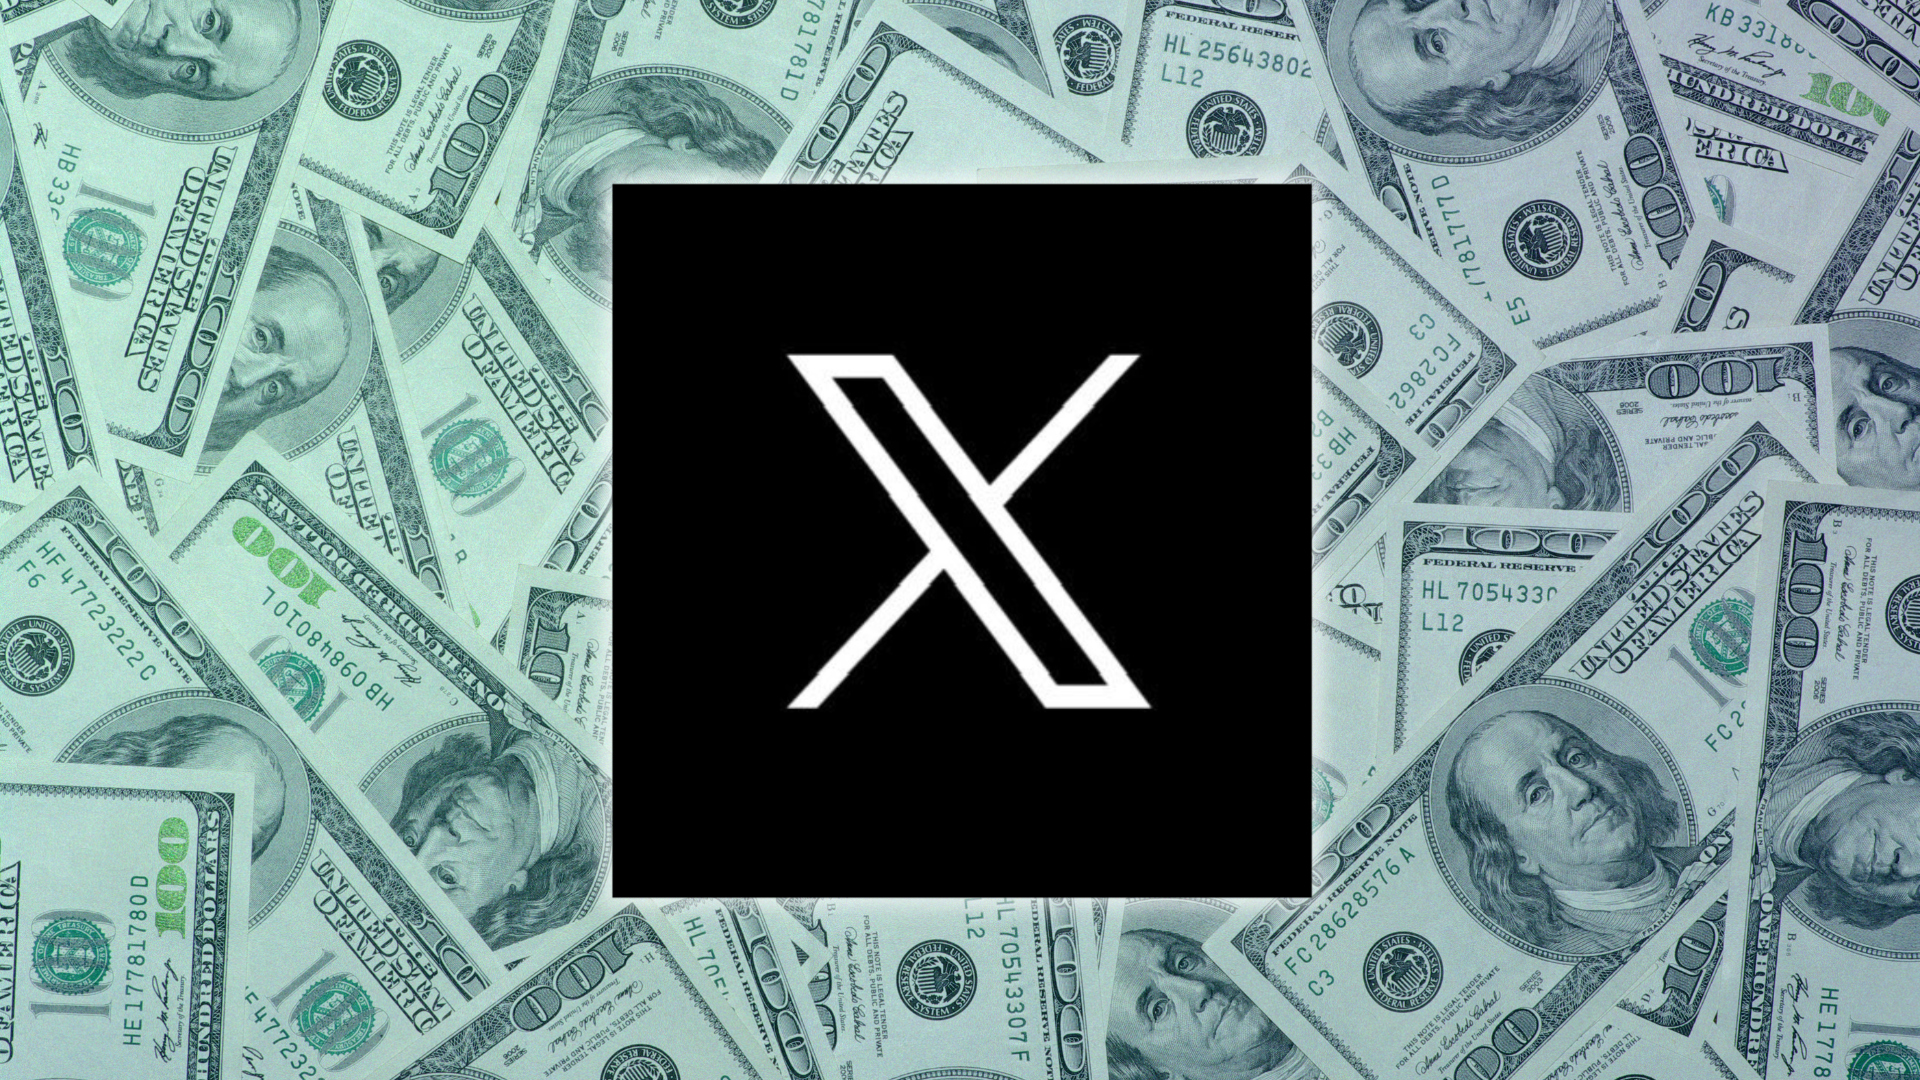 The X logo. Beneath it are $ 100 bills.